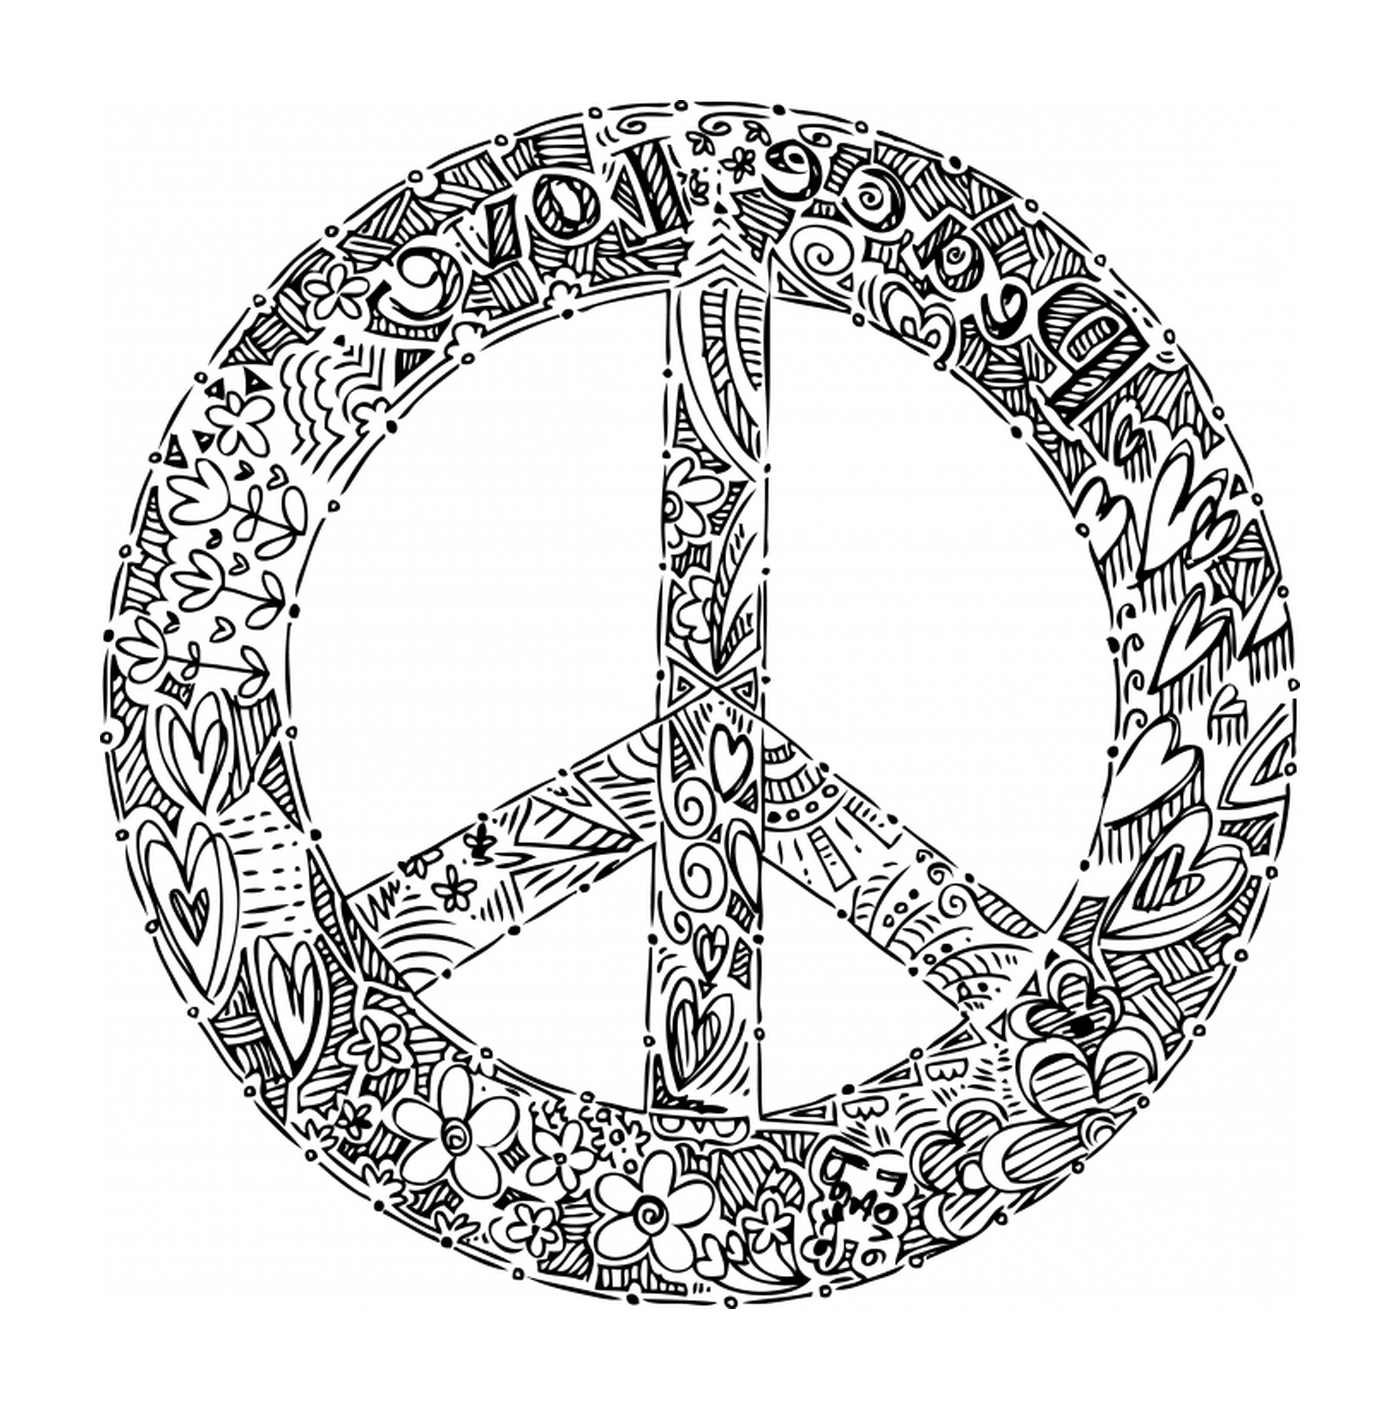  Peace and love, logo 